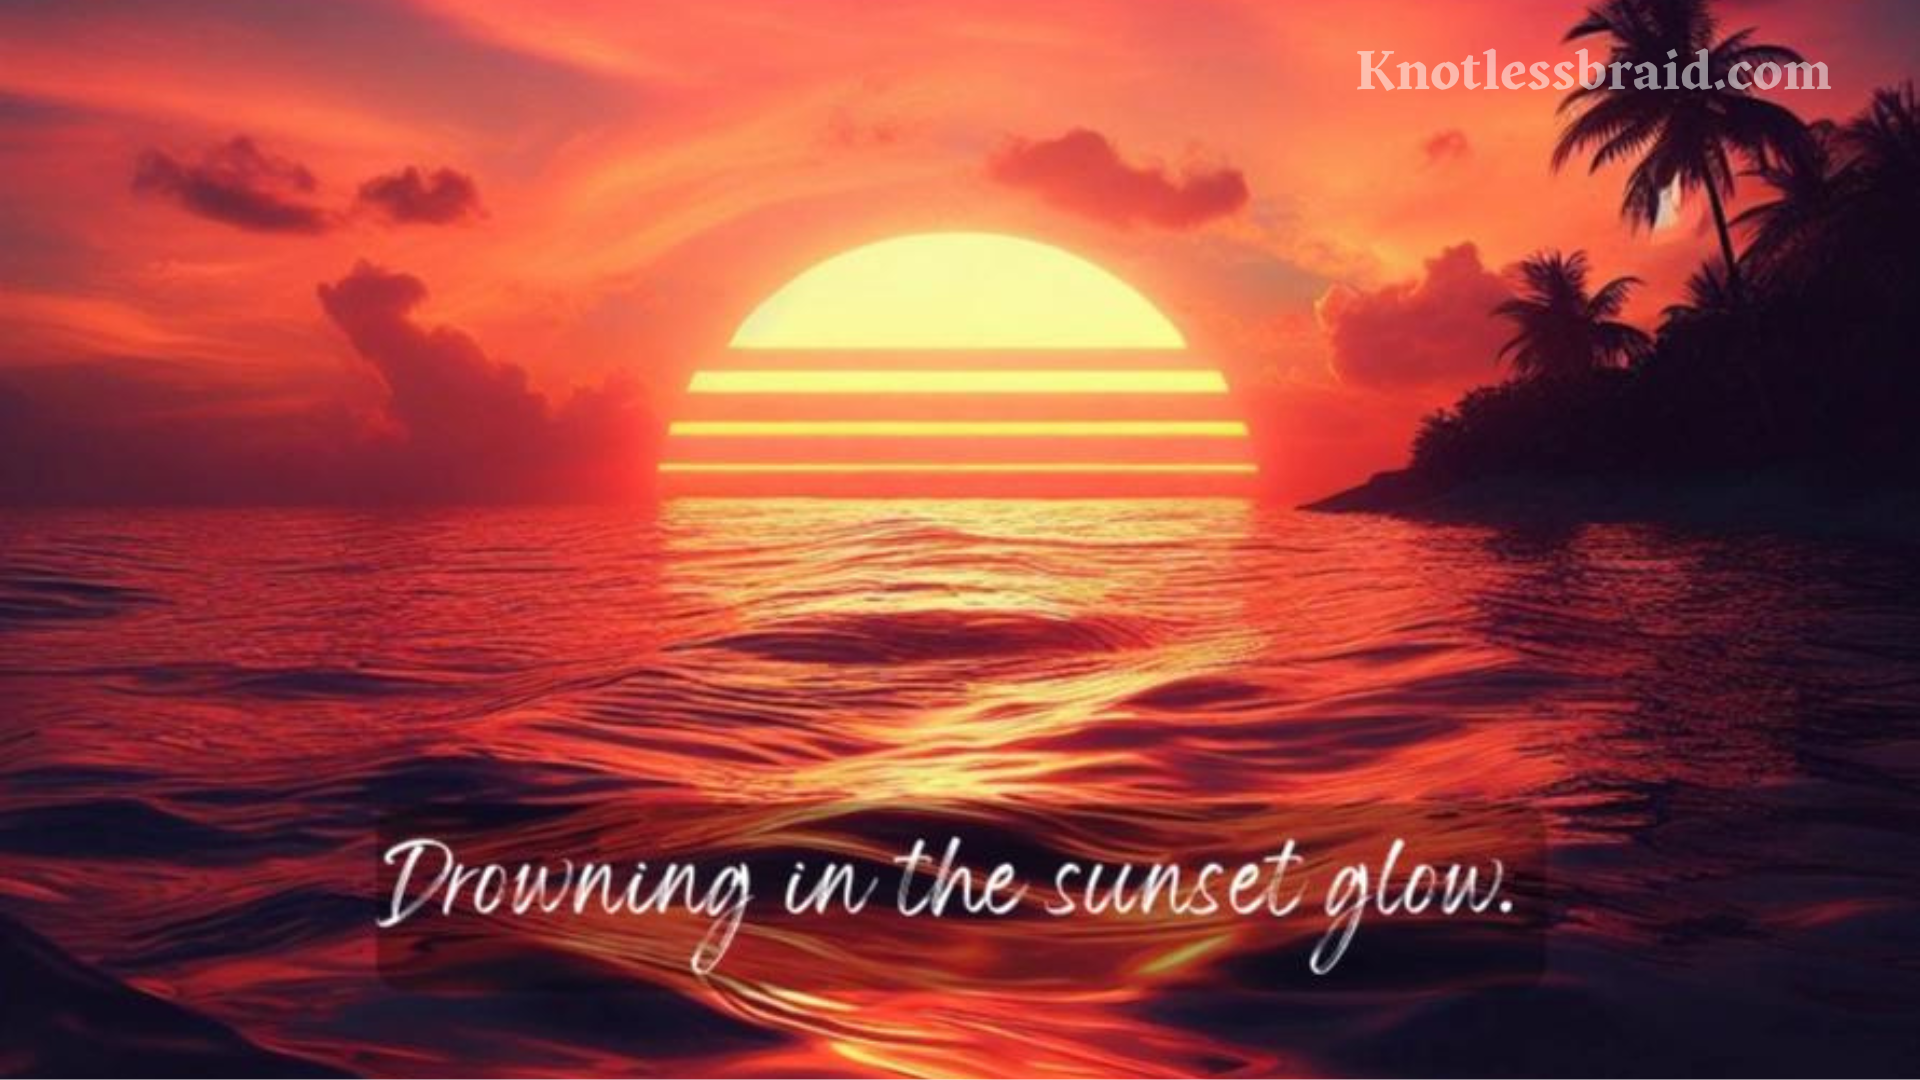 Sunset Captions For Instagram